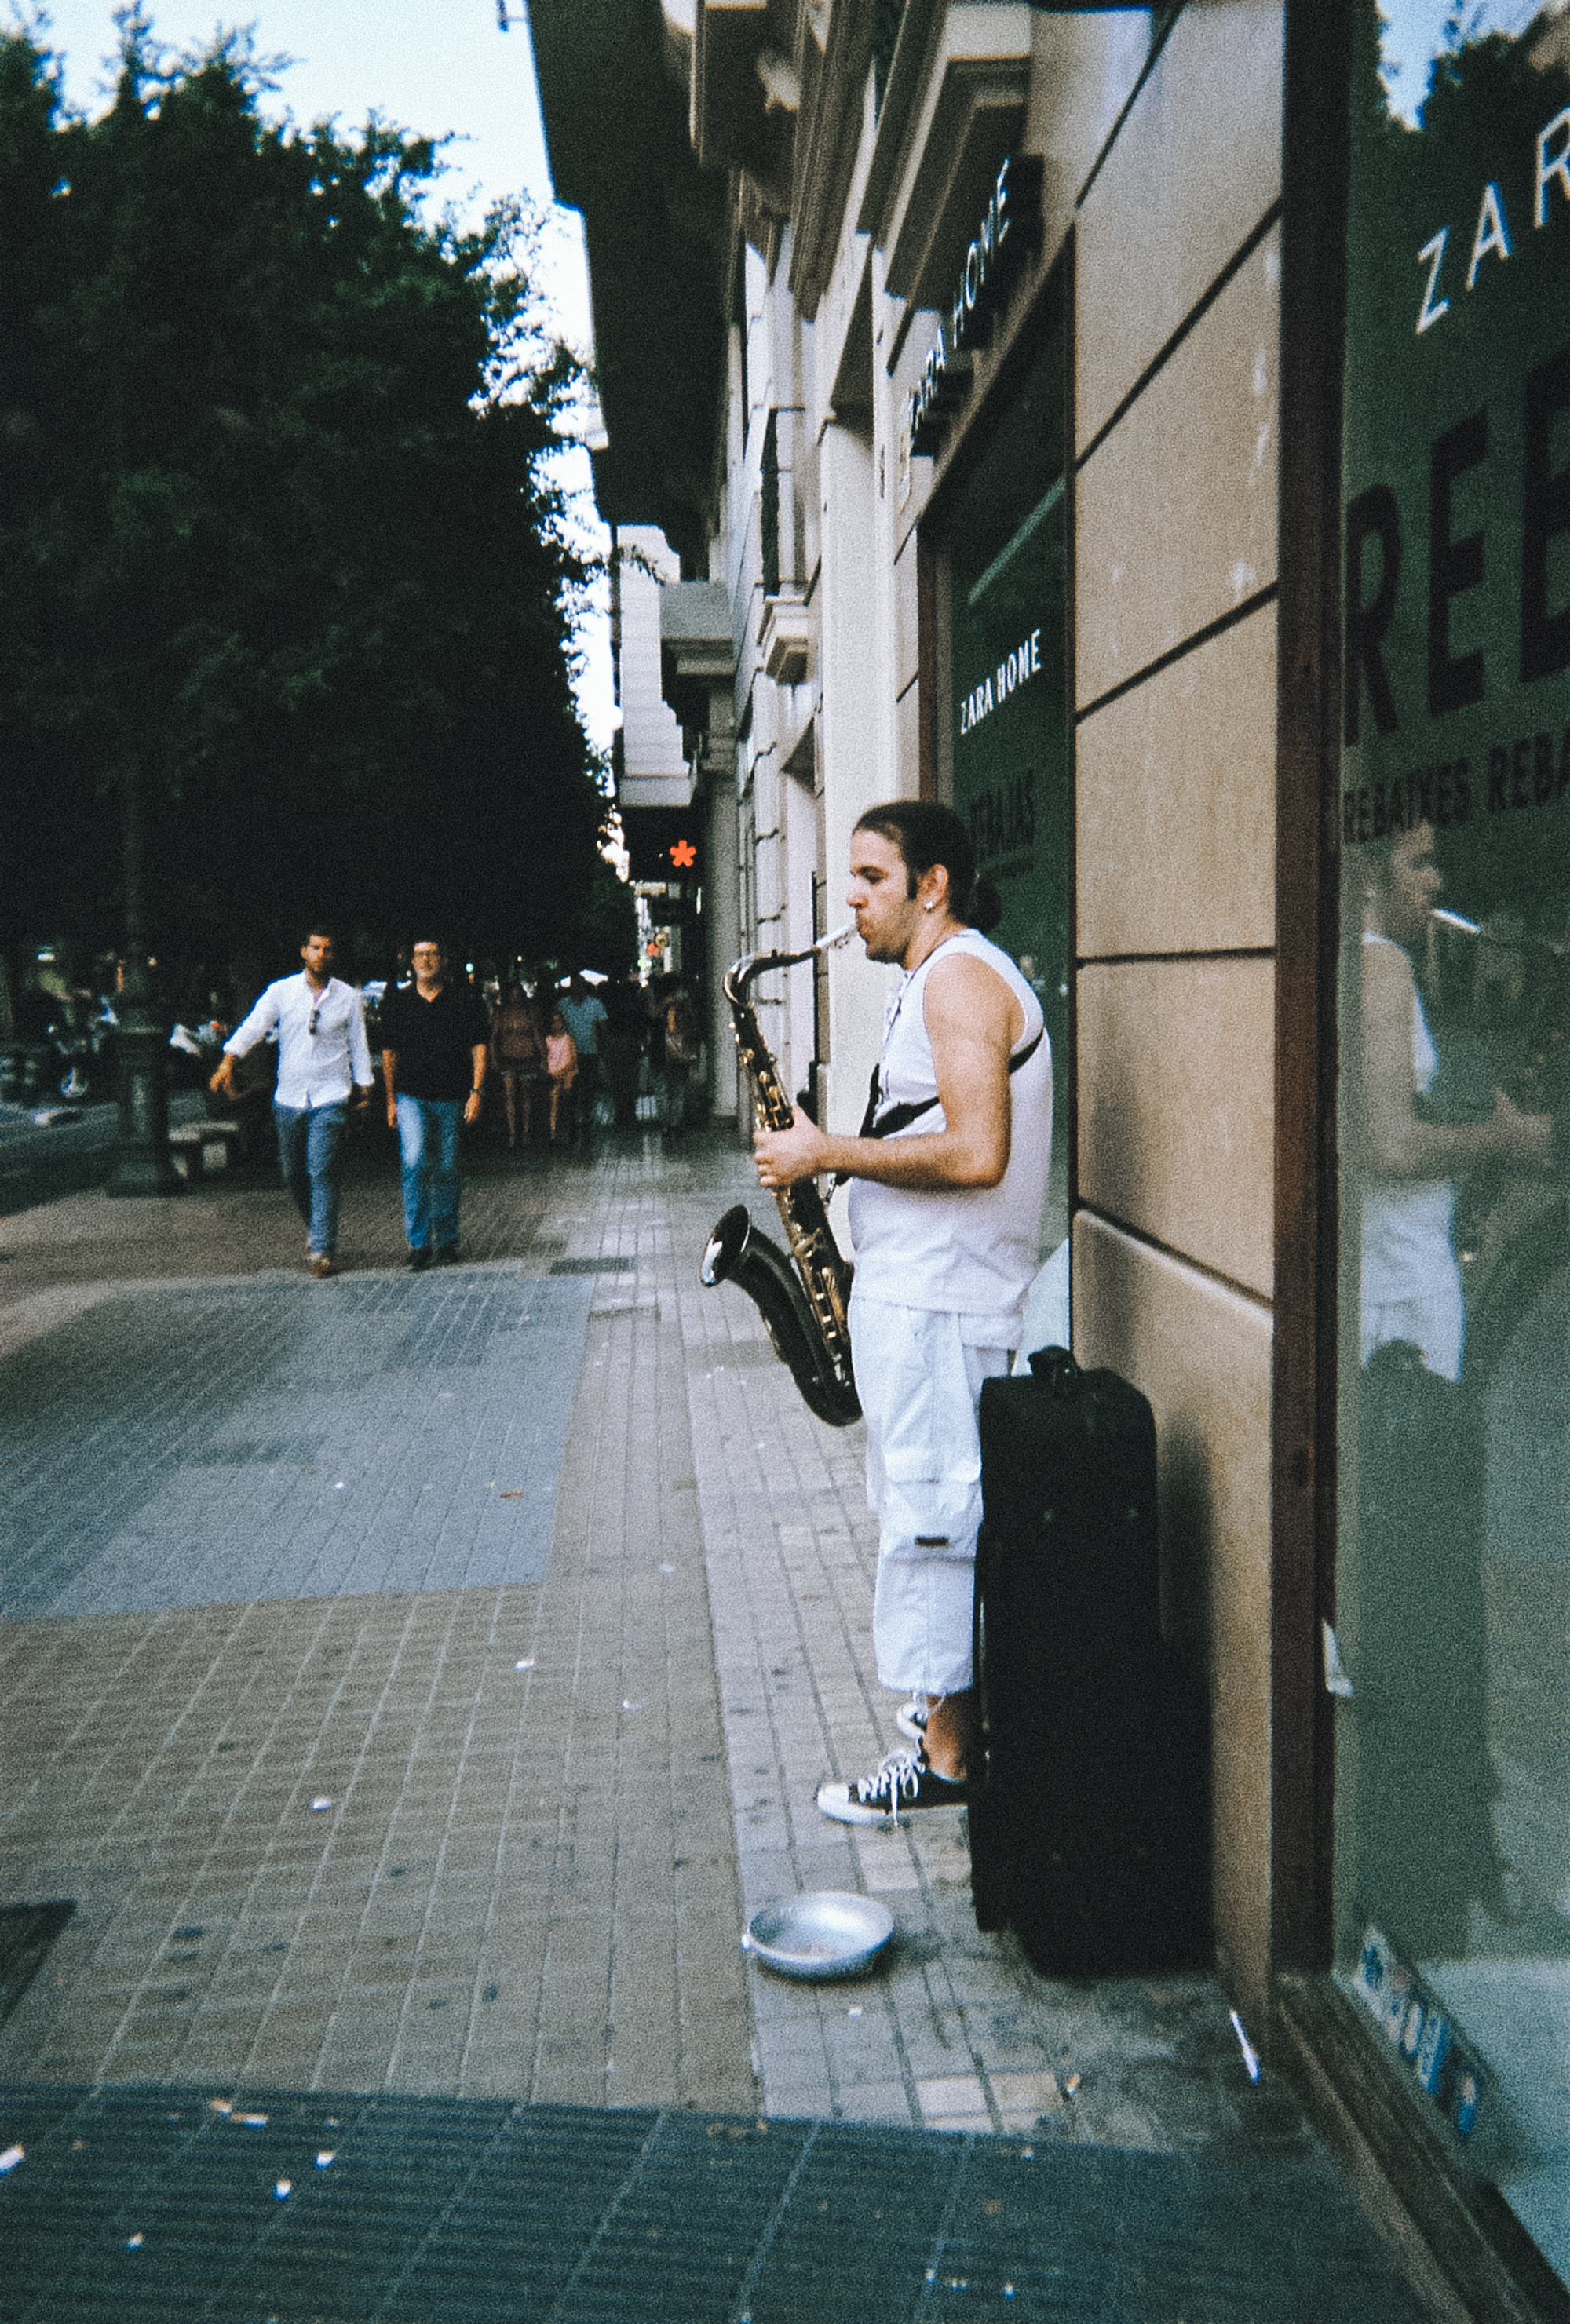 Street musician in Valencia, Spain